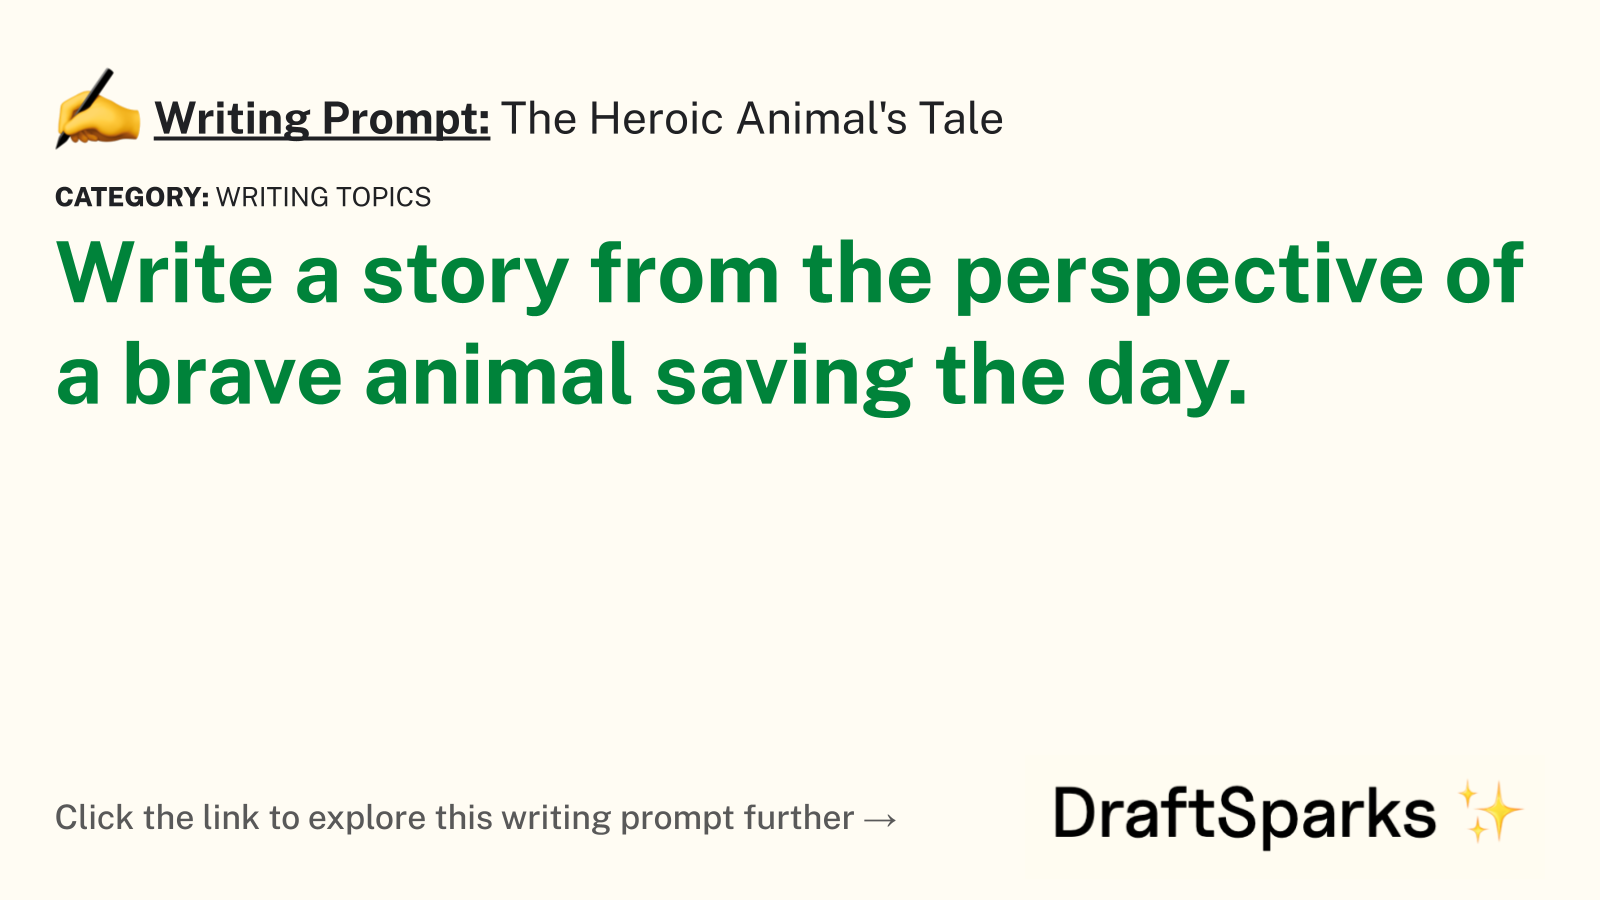 The Heroic Animal’s Tale